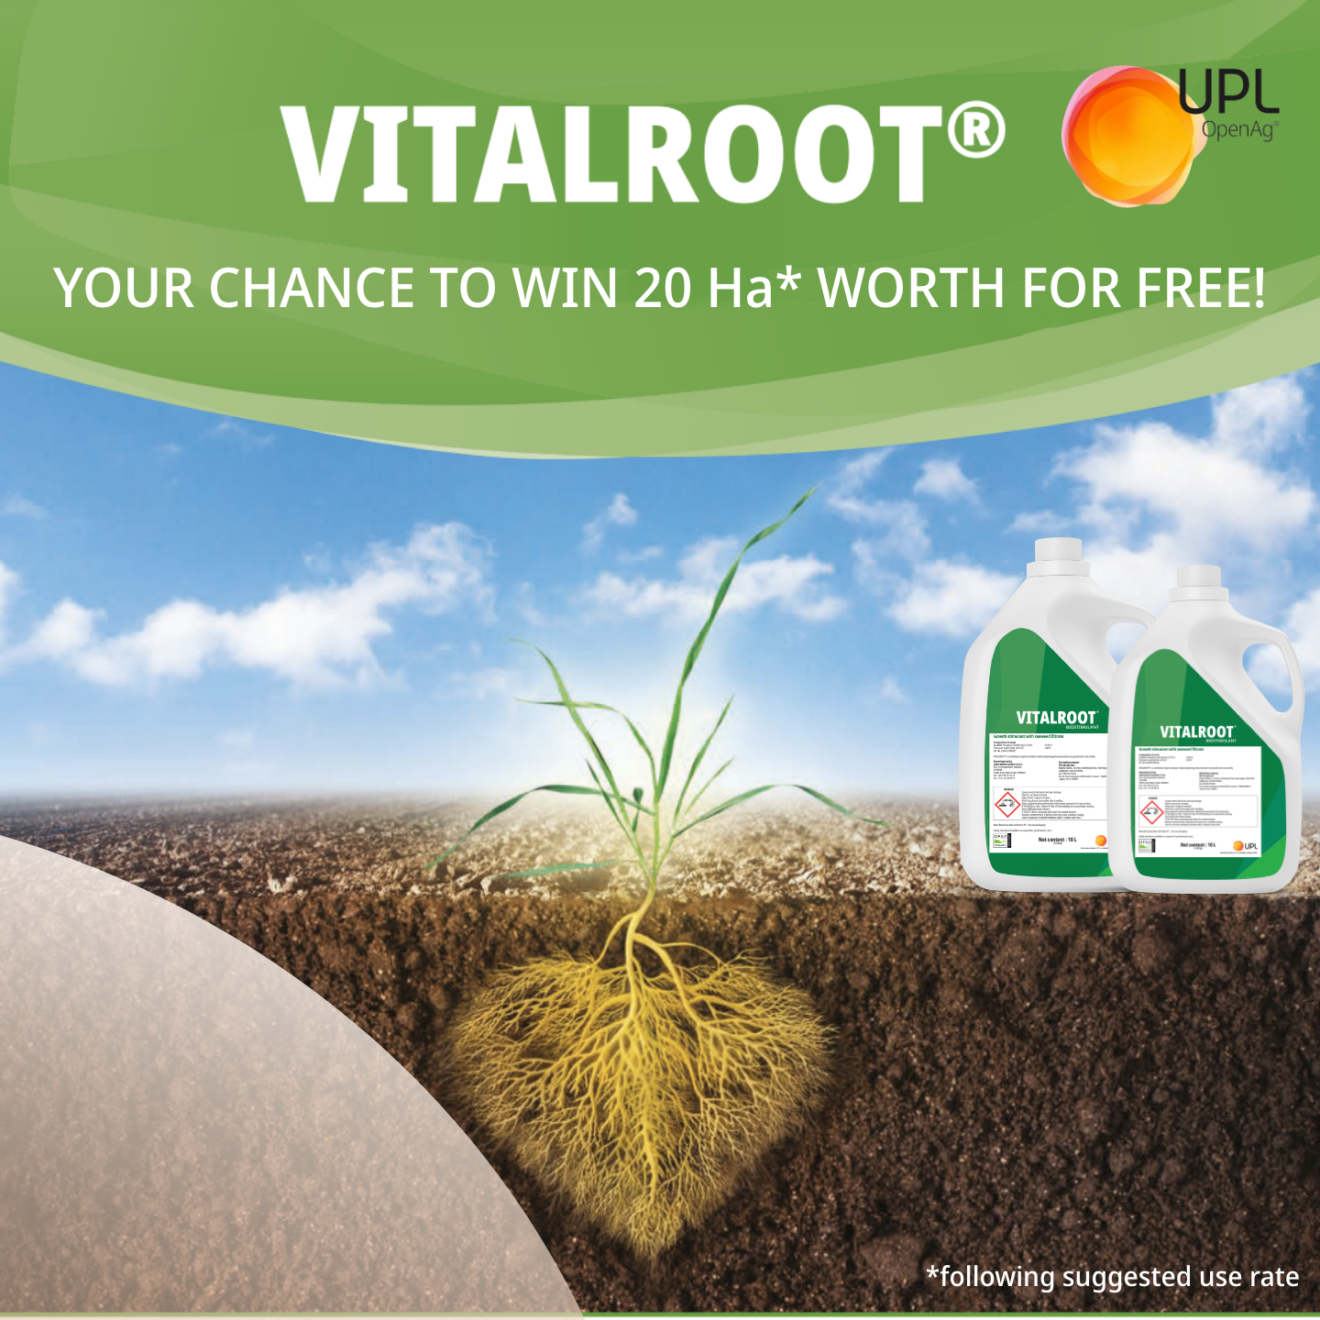 Join the VITALROOT Vitality Challenge this autumn!